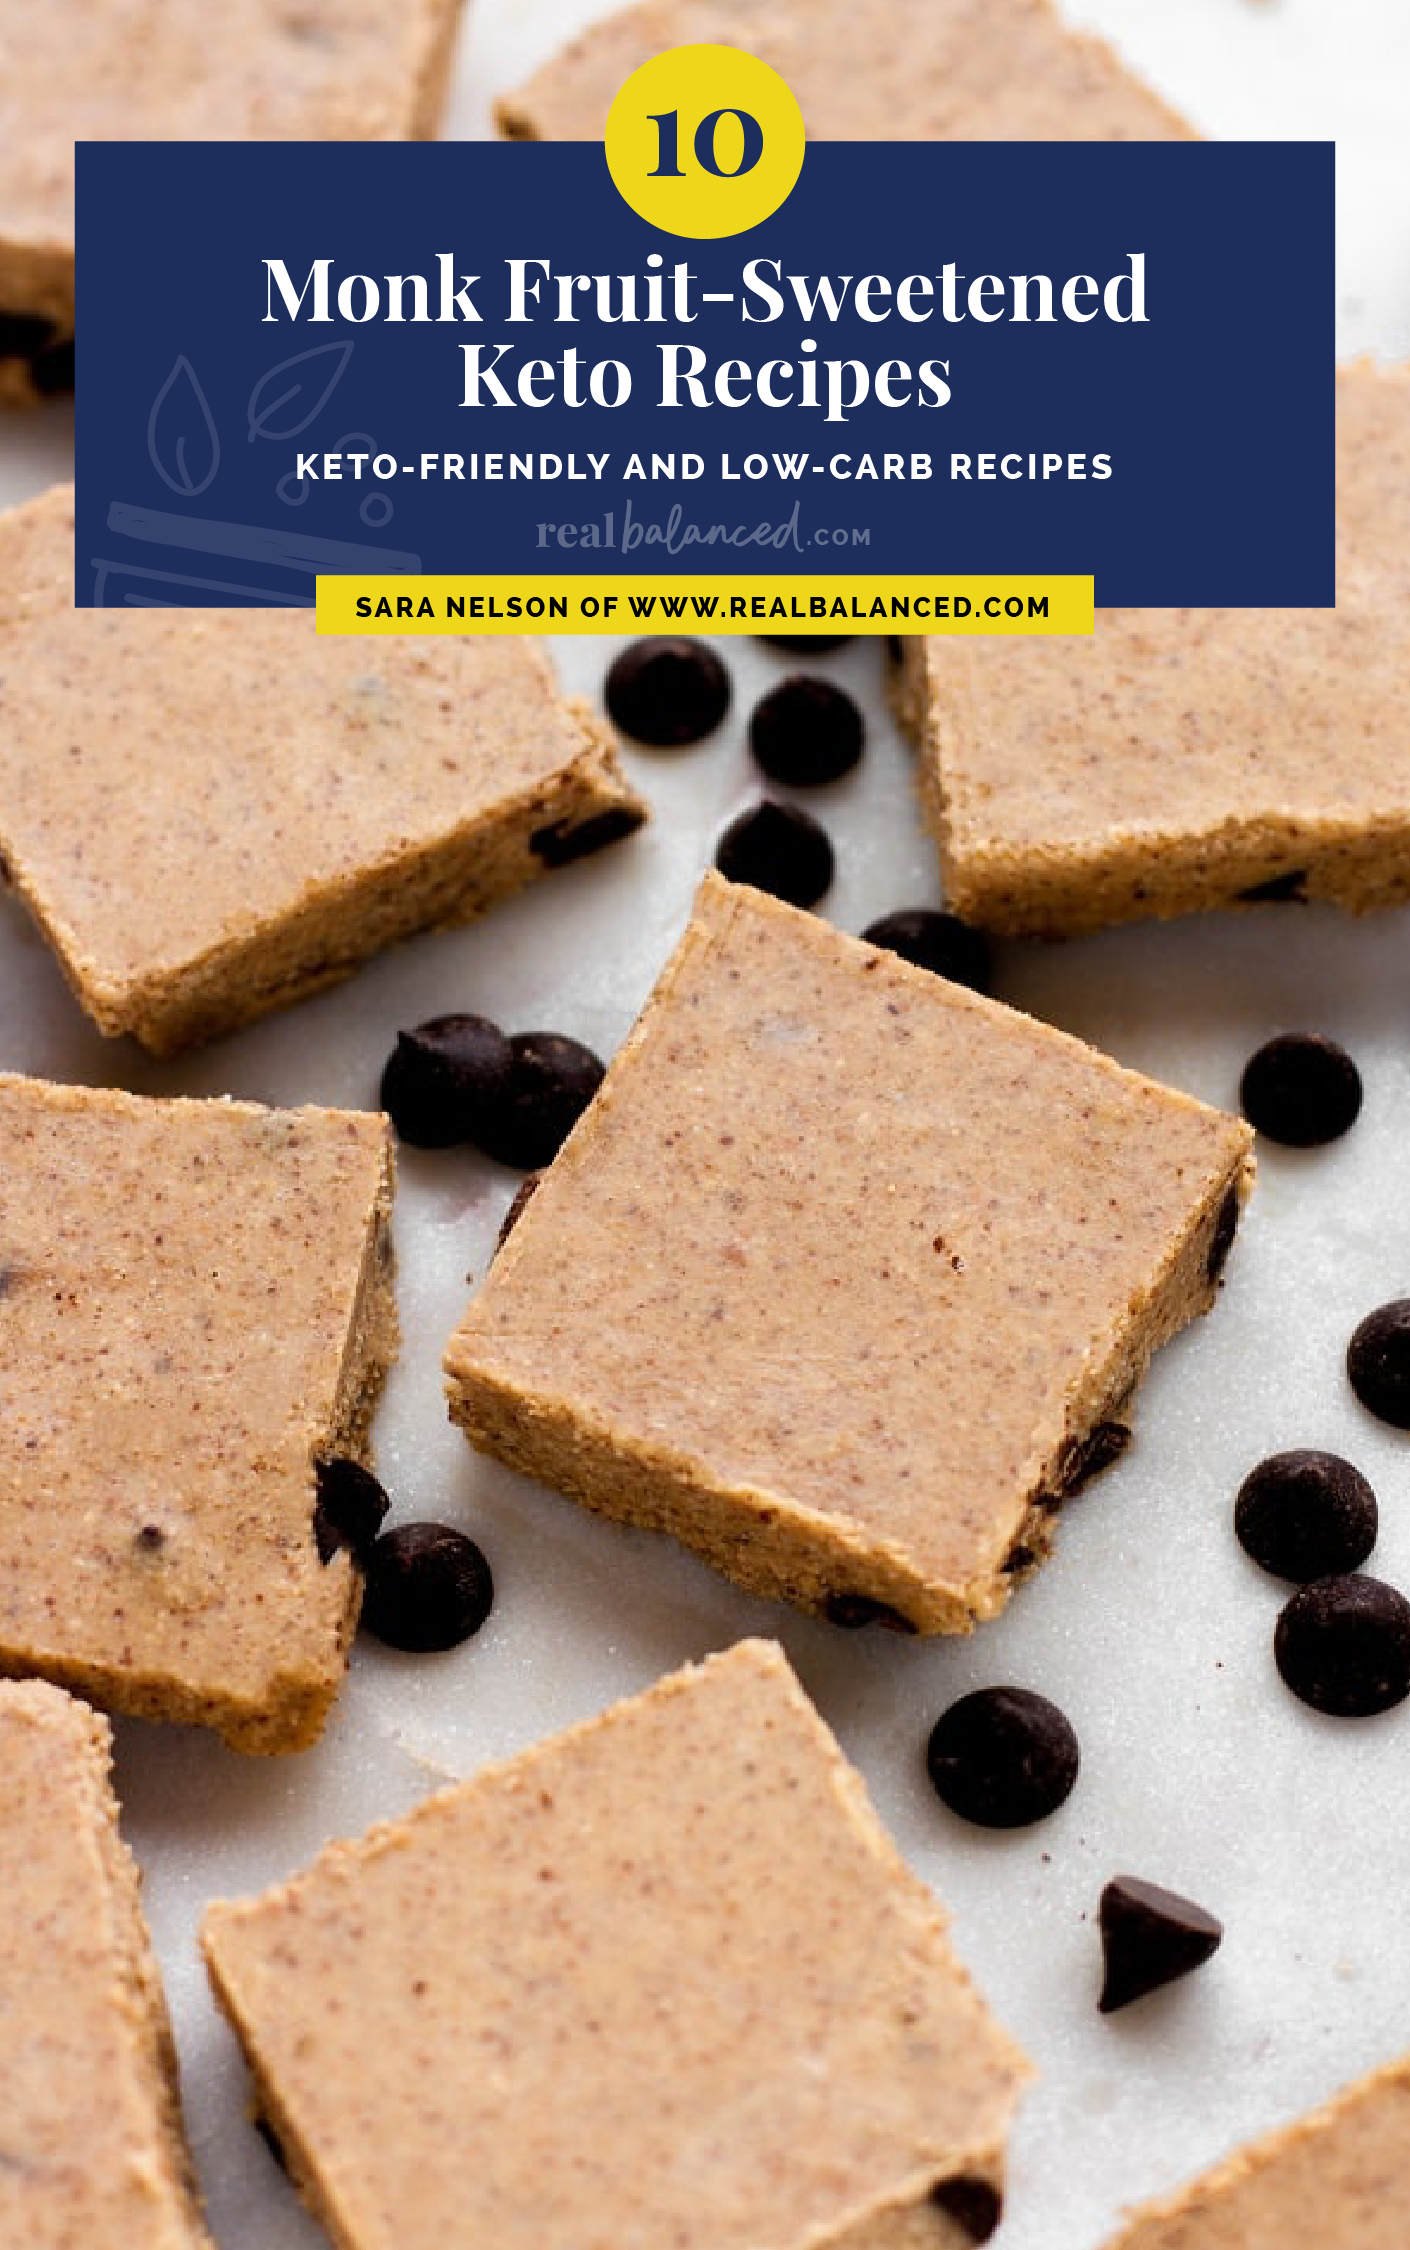 monk fruit-sweetened keto recipes ebook cover